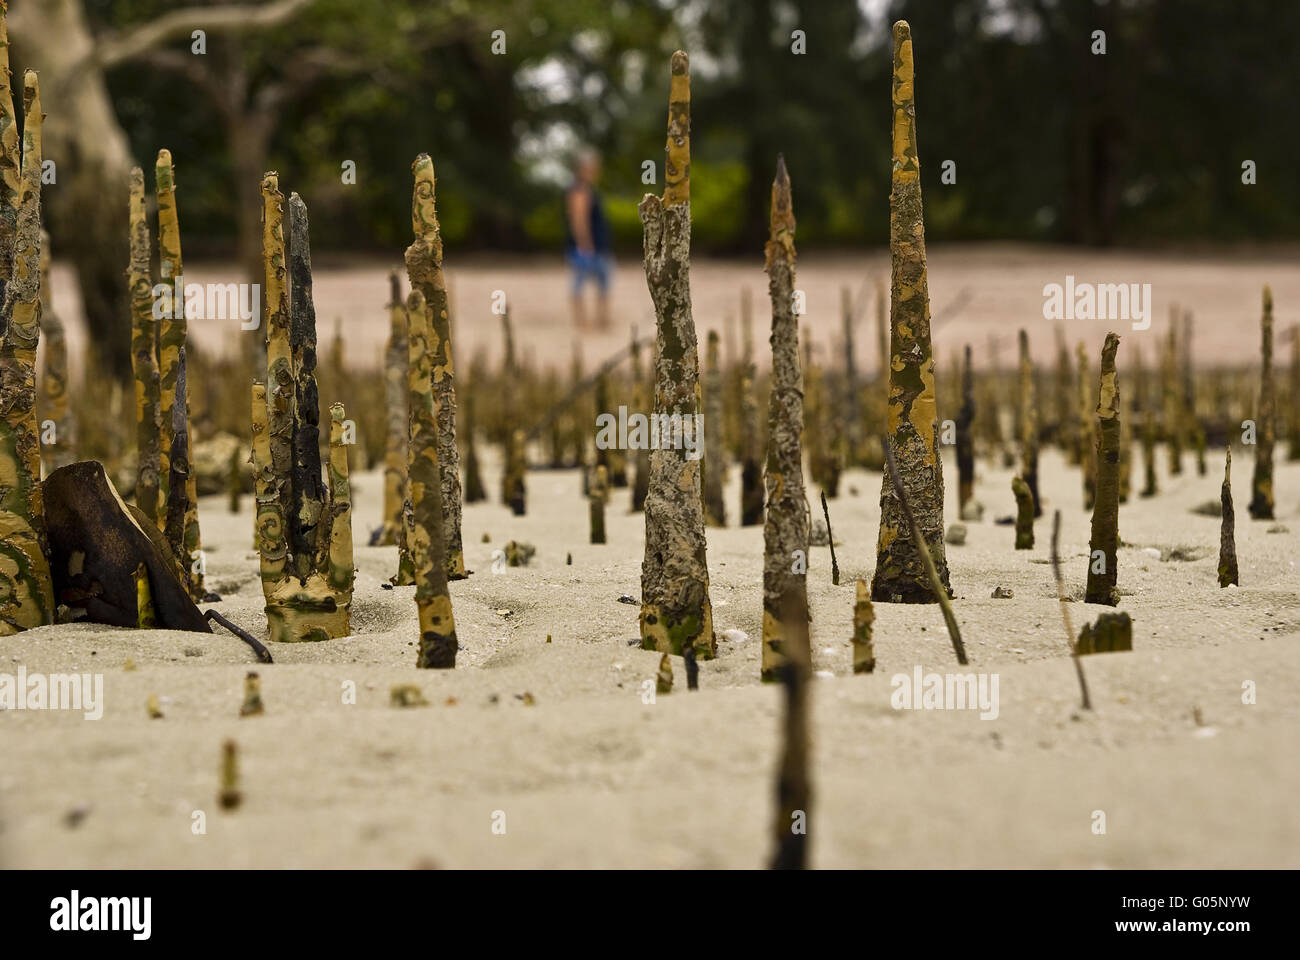 Atem-Wurzeln (Luftwurzeln) der Mangroven Stockfoto